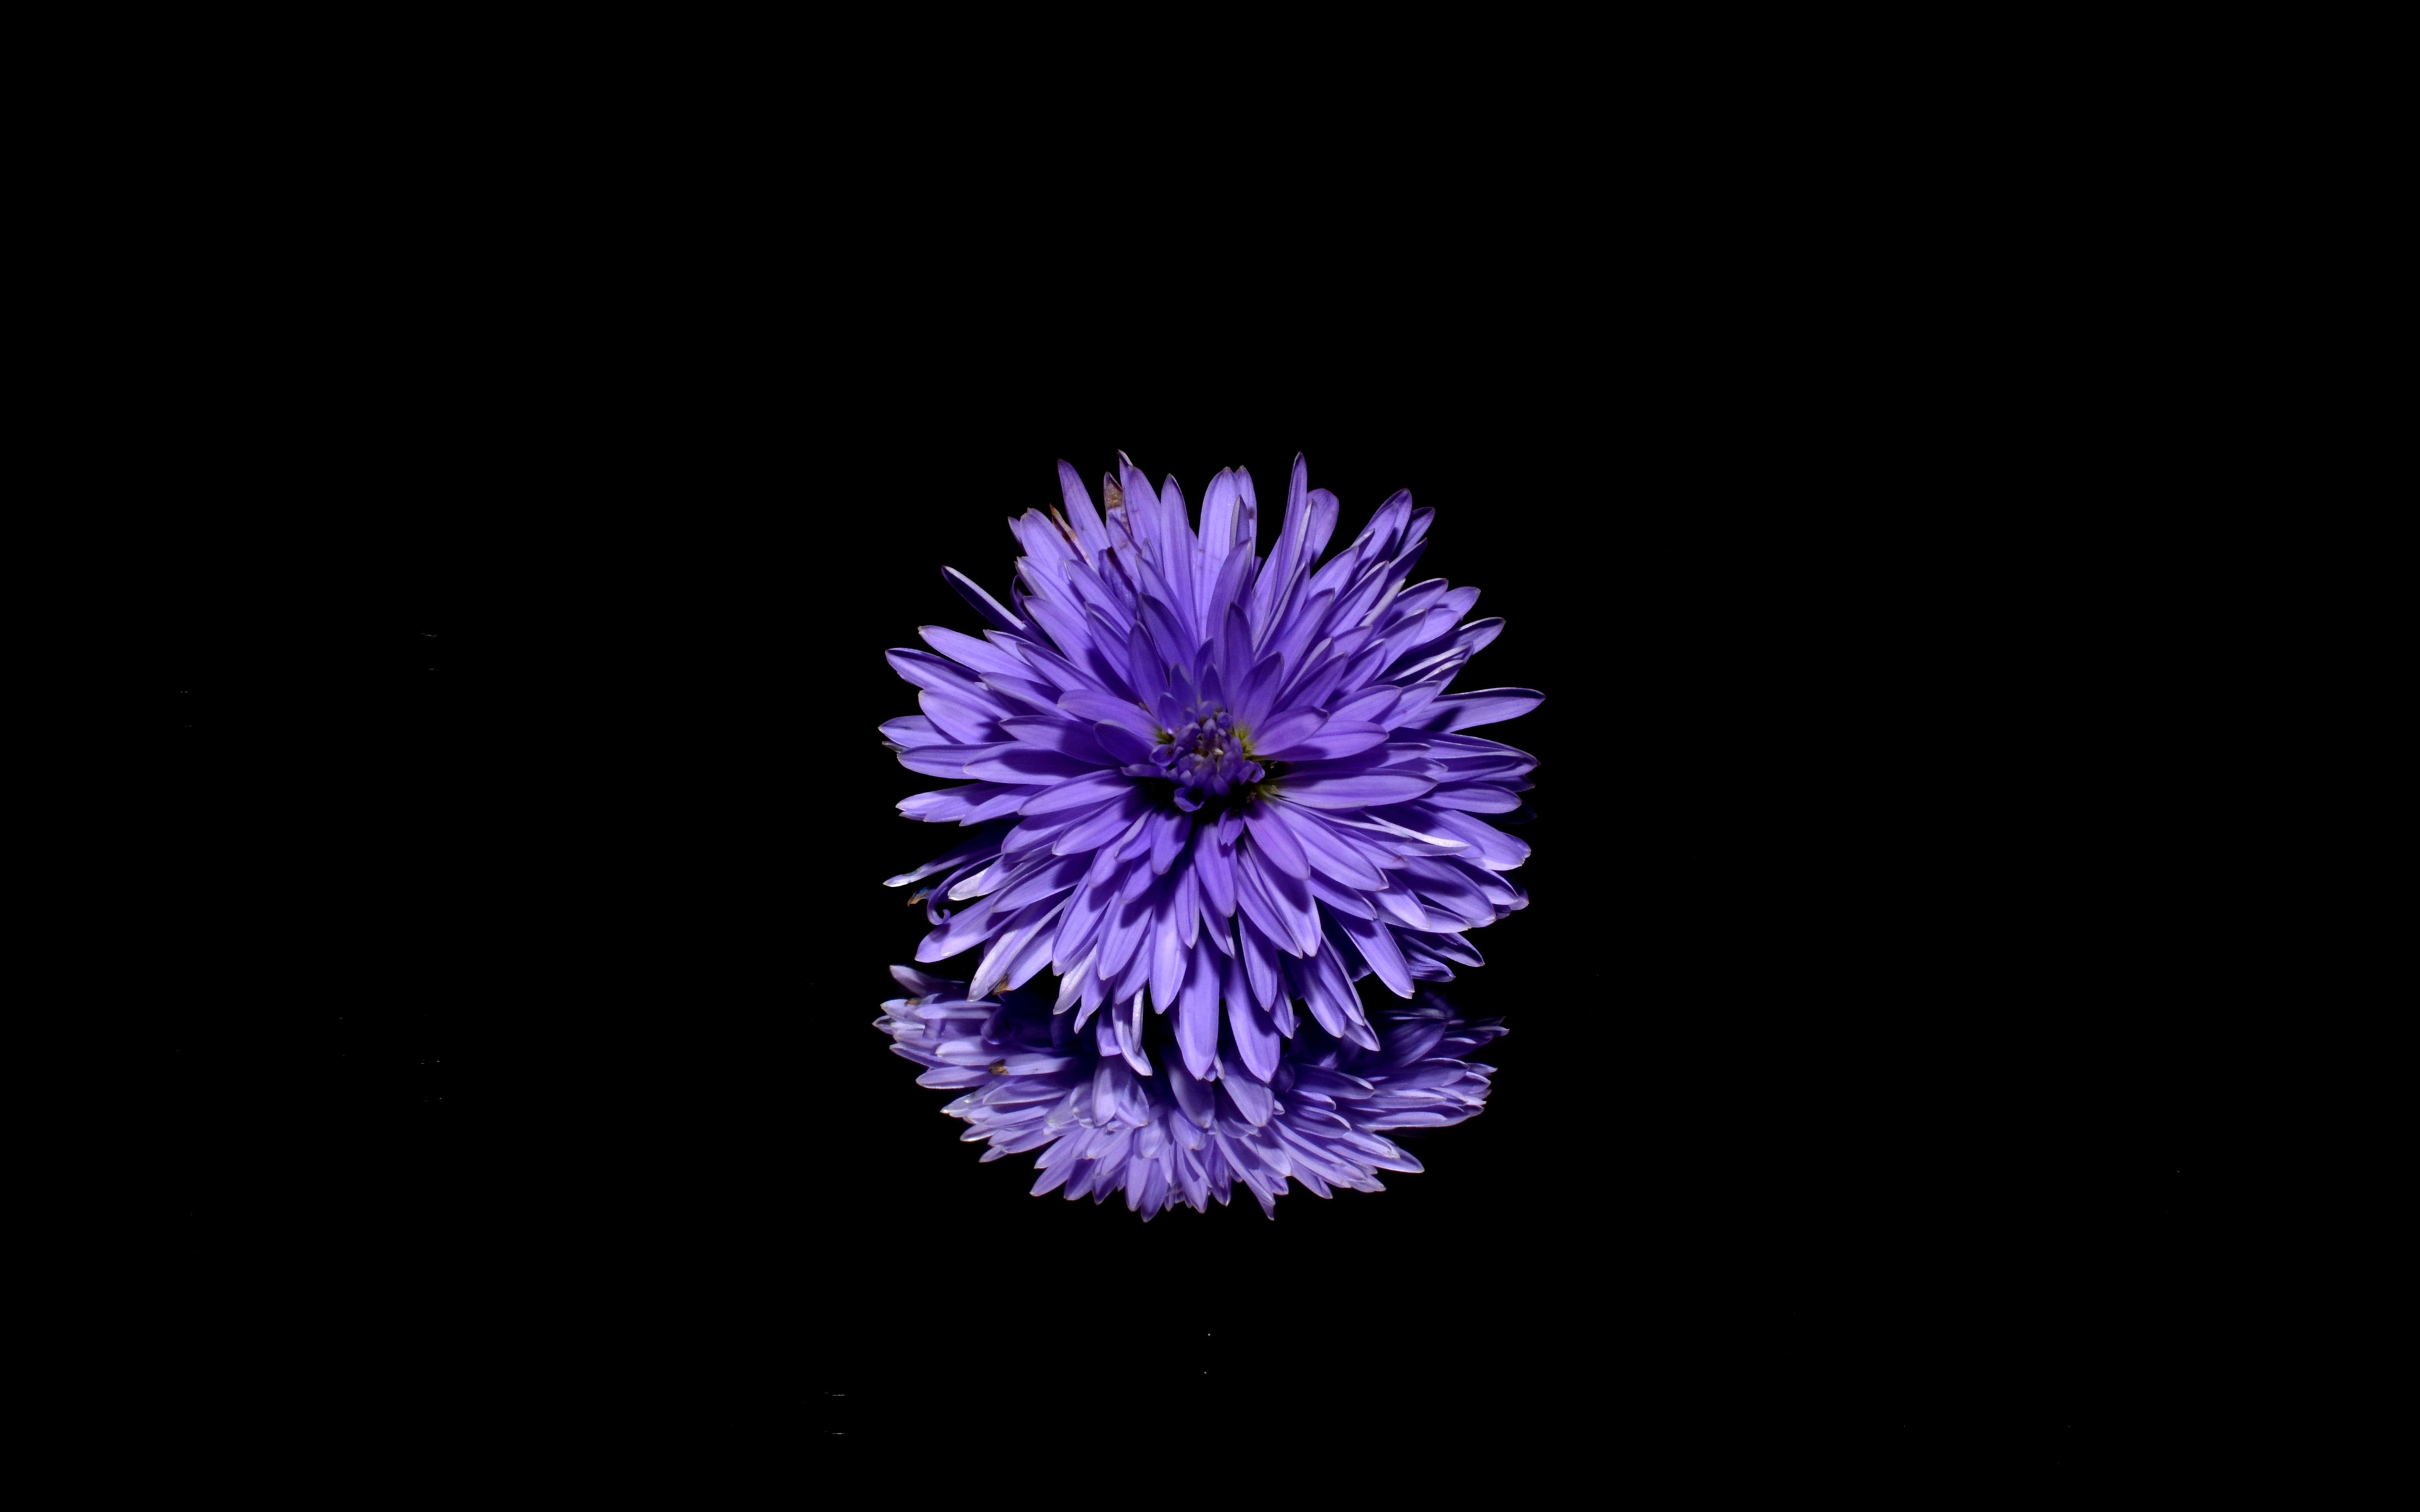 blossom-purple-flower-black-background-reflection-7r.jpg